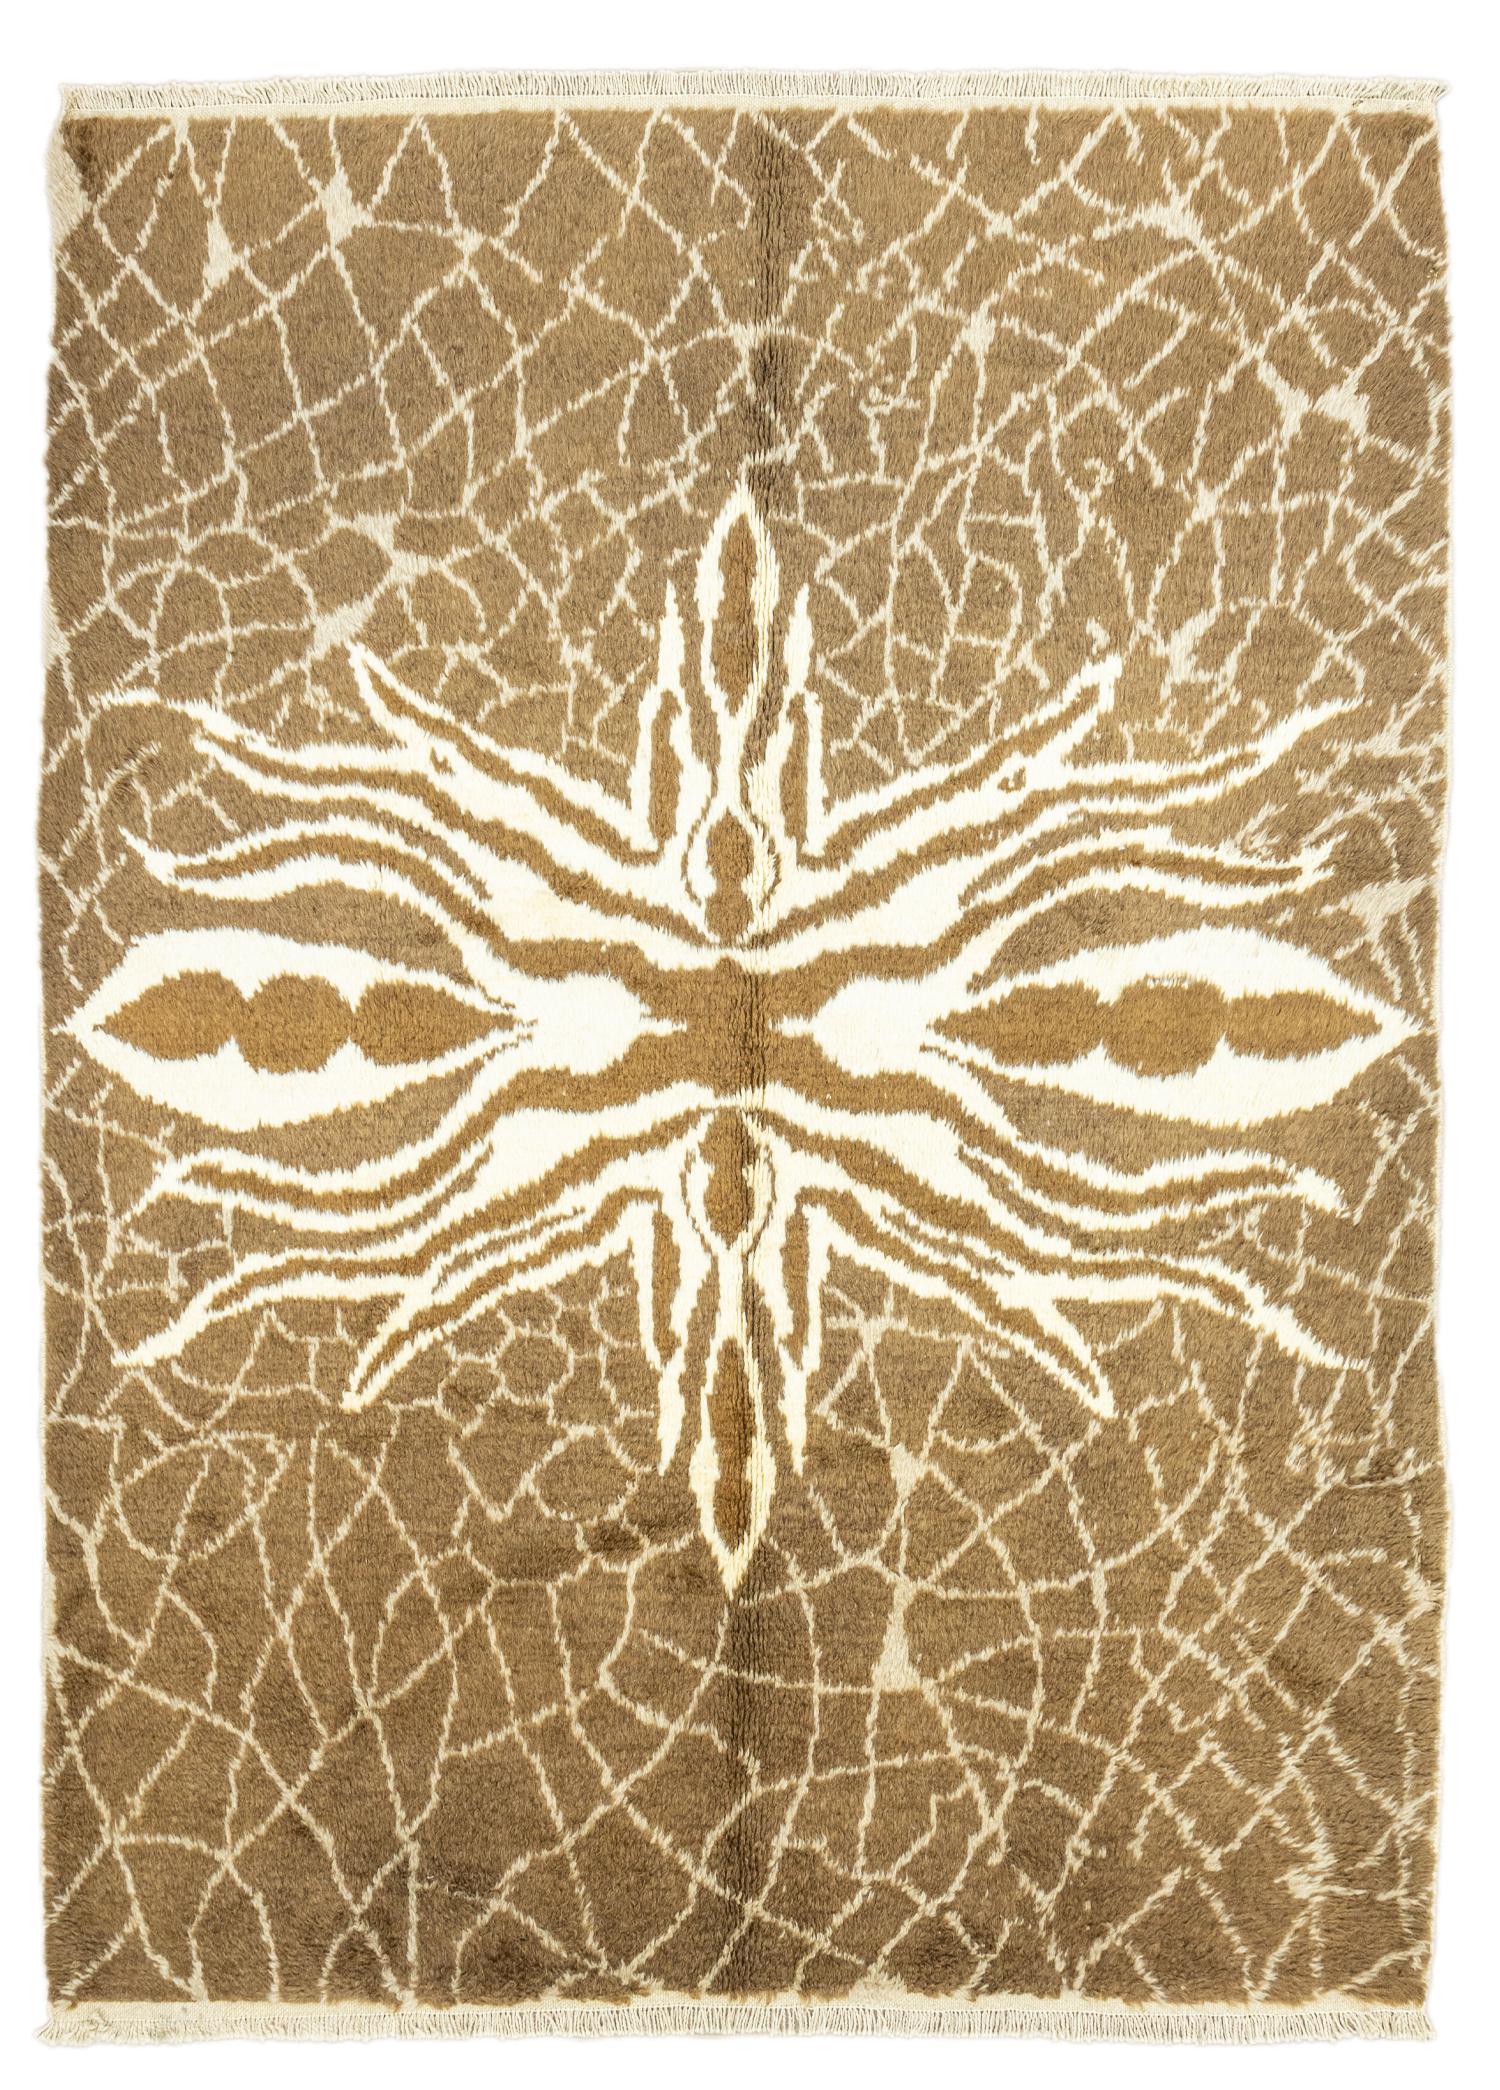 Belen Abstract Designed Hand-Woven Shaggy Rug 167x232 cm